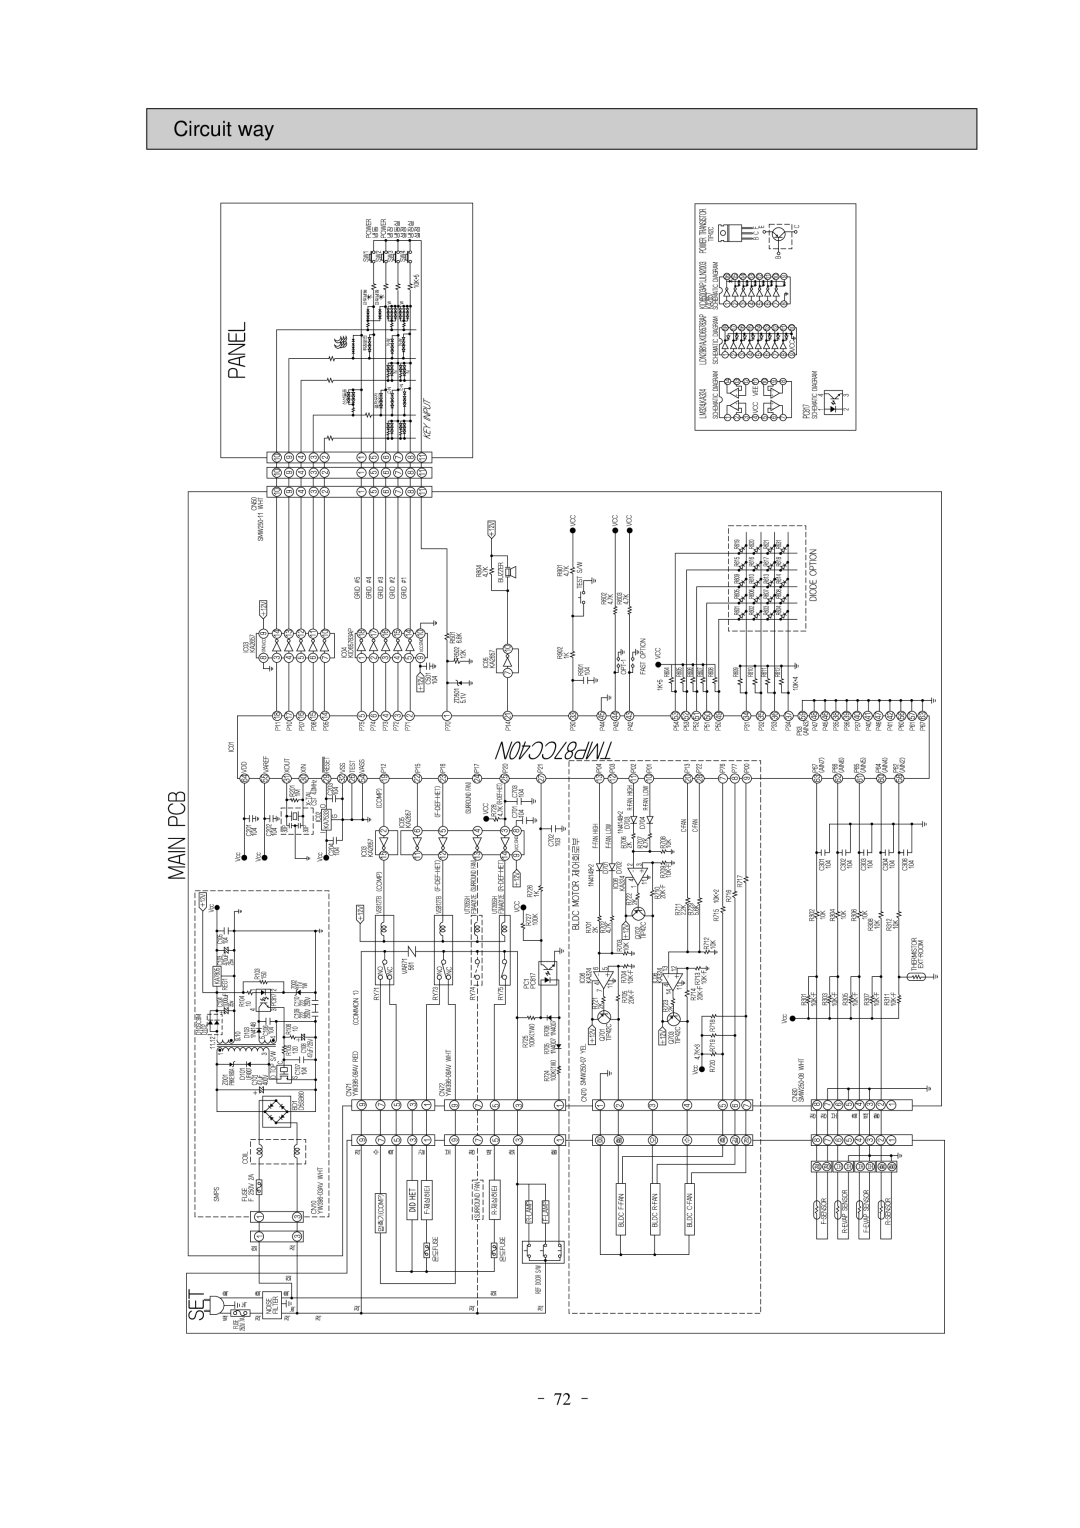 Samsung SR-69NMC, SR-65KTC, SR-65NMC, SR-61KTC, SR-61NMC specifications Circuit way 